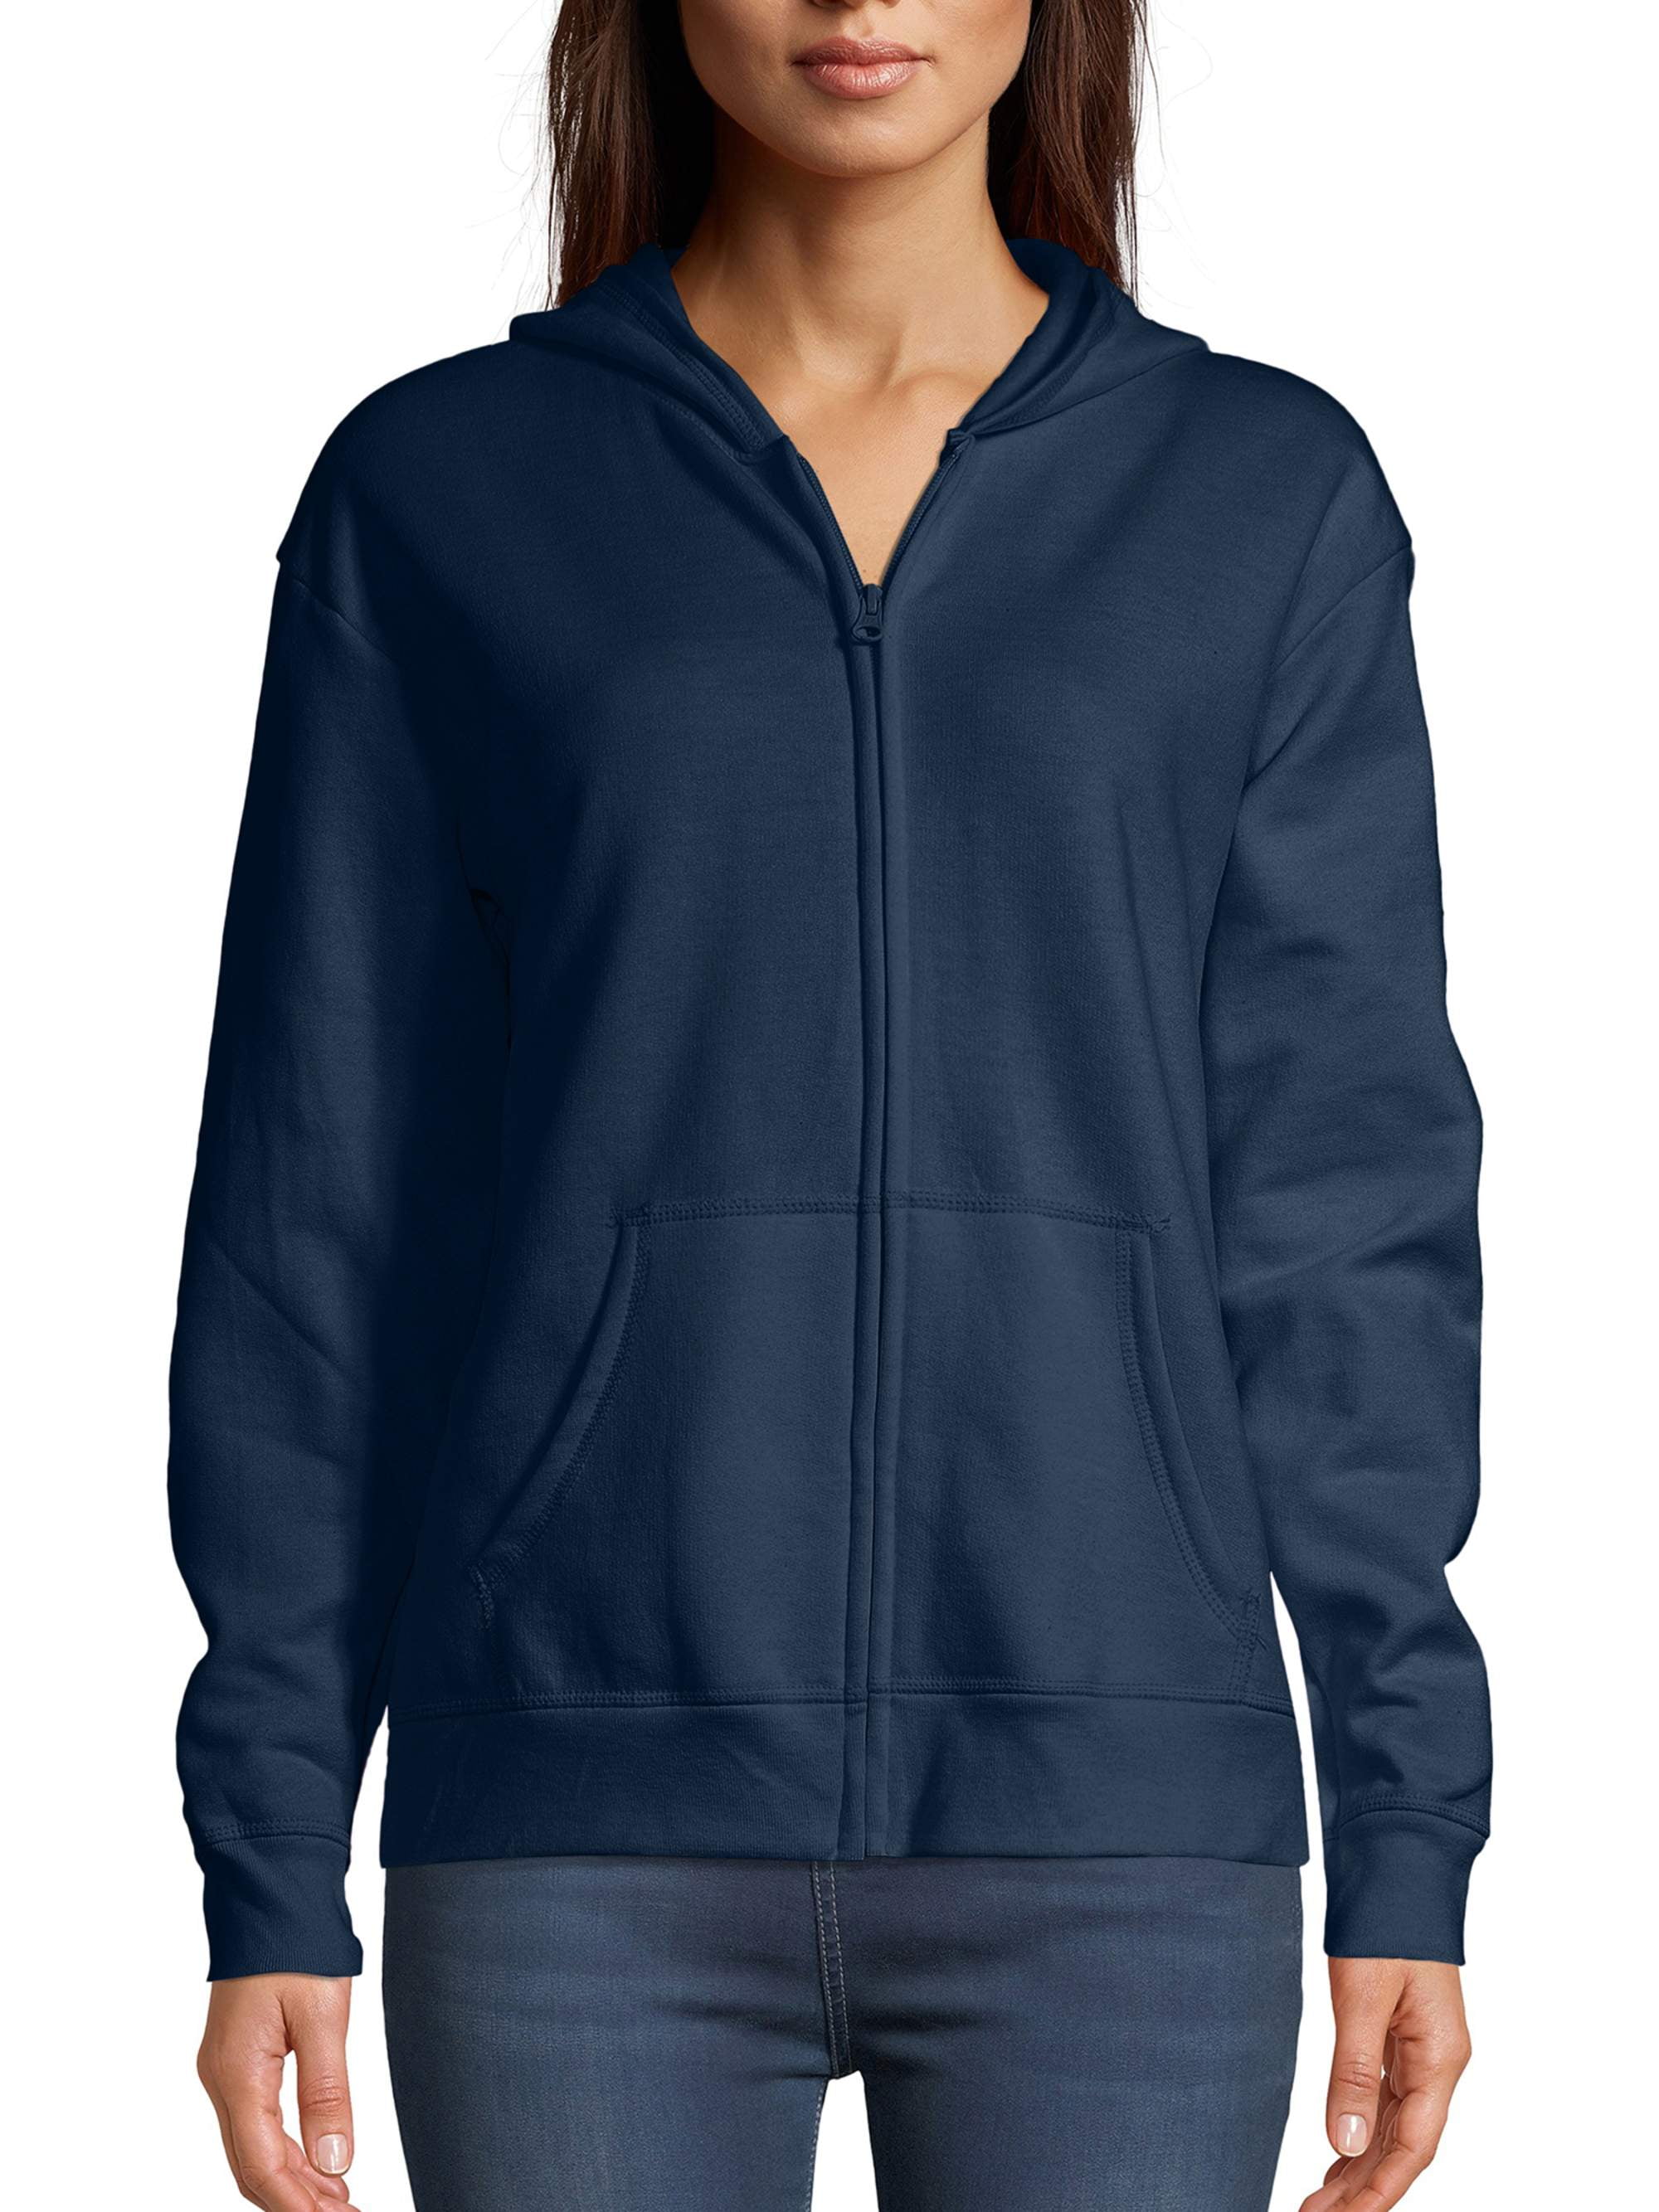 Just Hiker Hoodies Outdoor Space Cotton Sweatshirt ComfortSoft Sweater Pullover Sportswear 